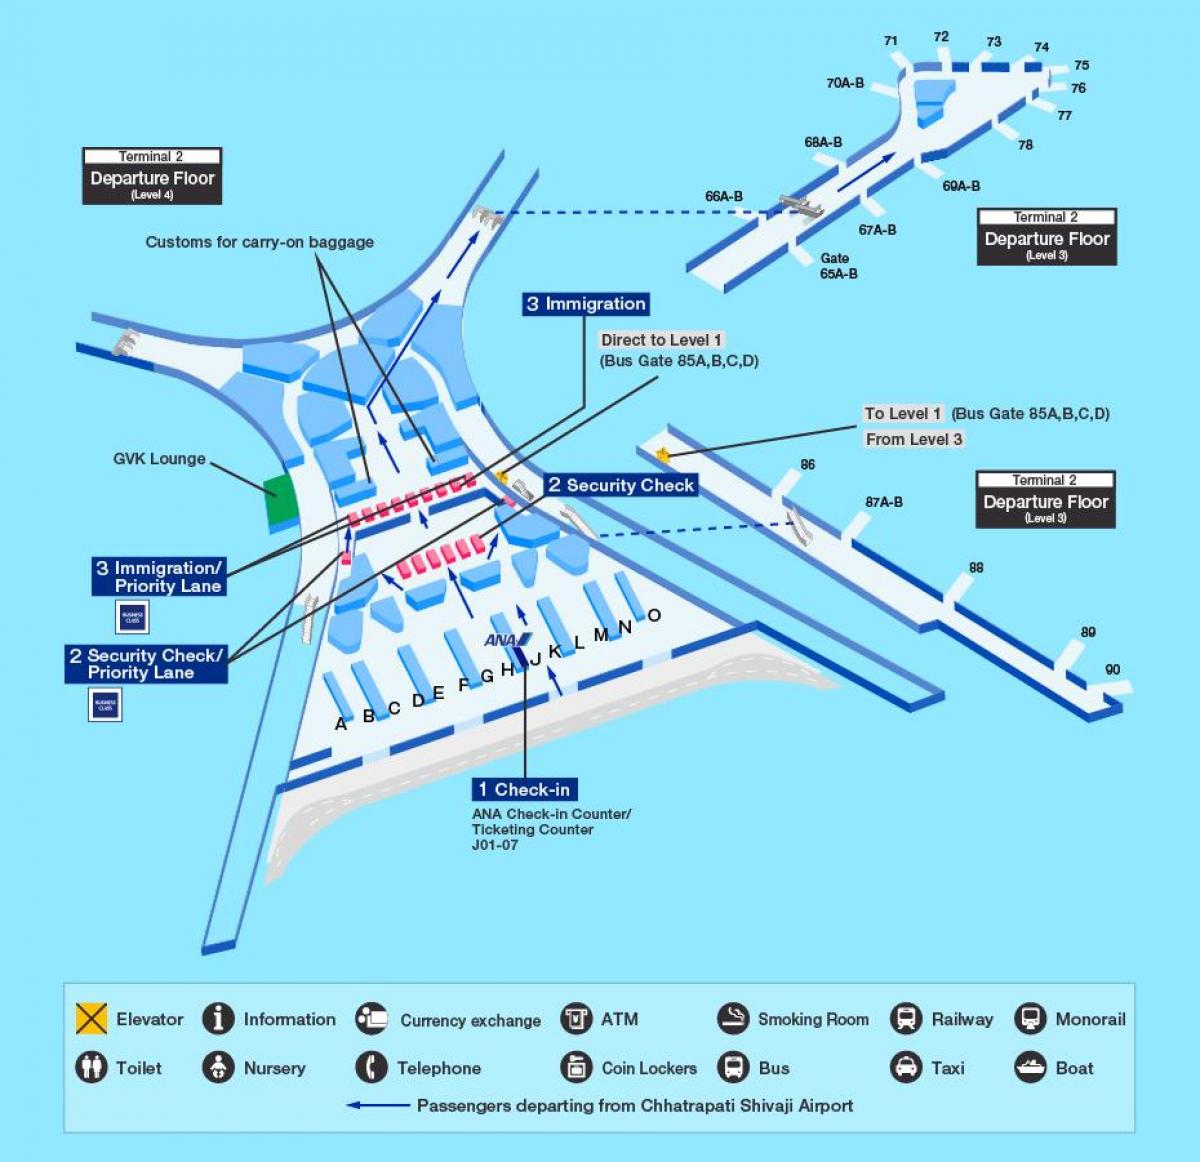 Mumbai international airport terminal 2 χάρτης